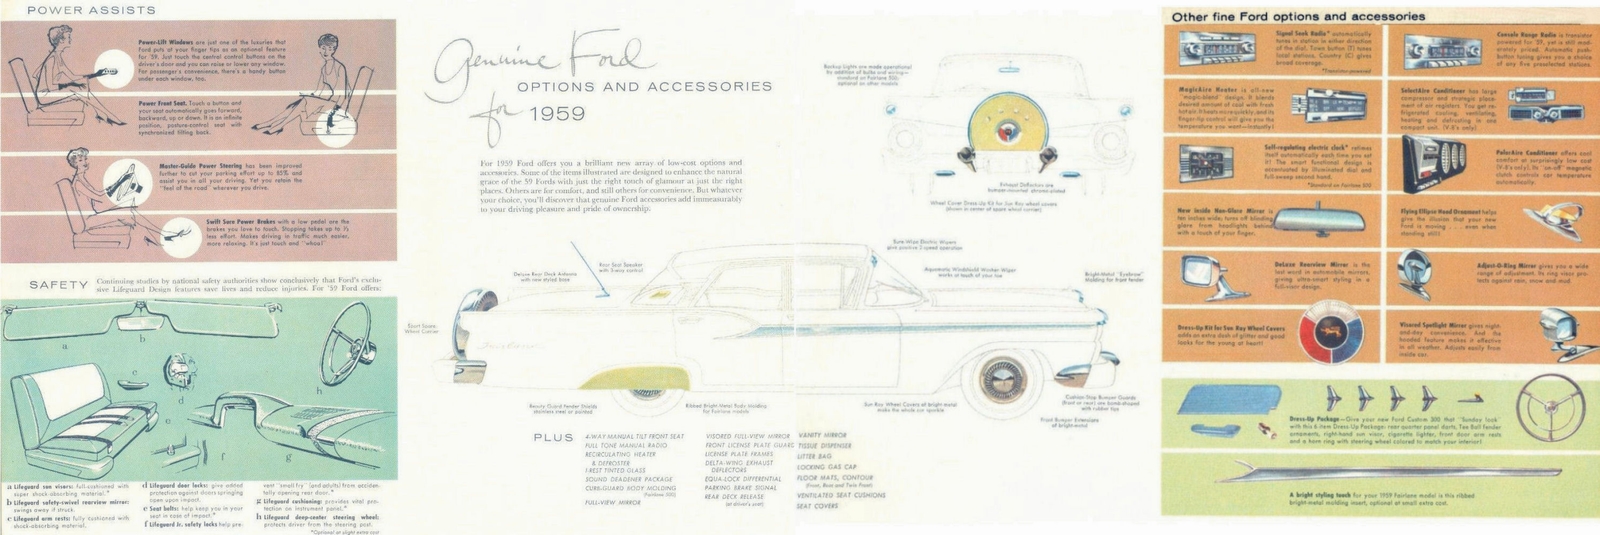 n_1959 Ford Prestige (10-58)-18-19.jpg